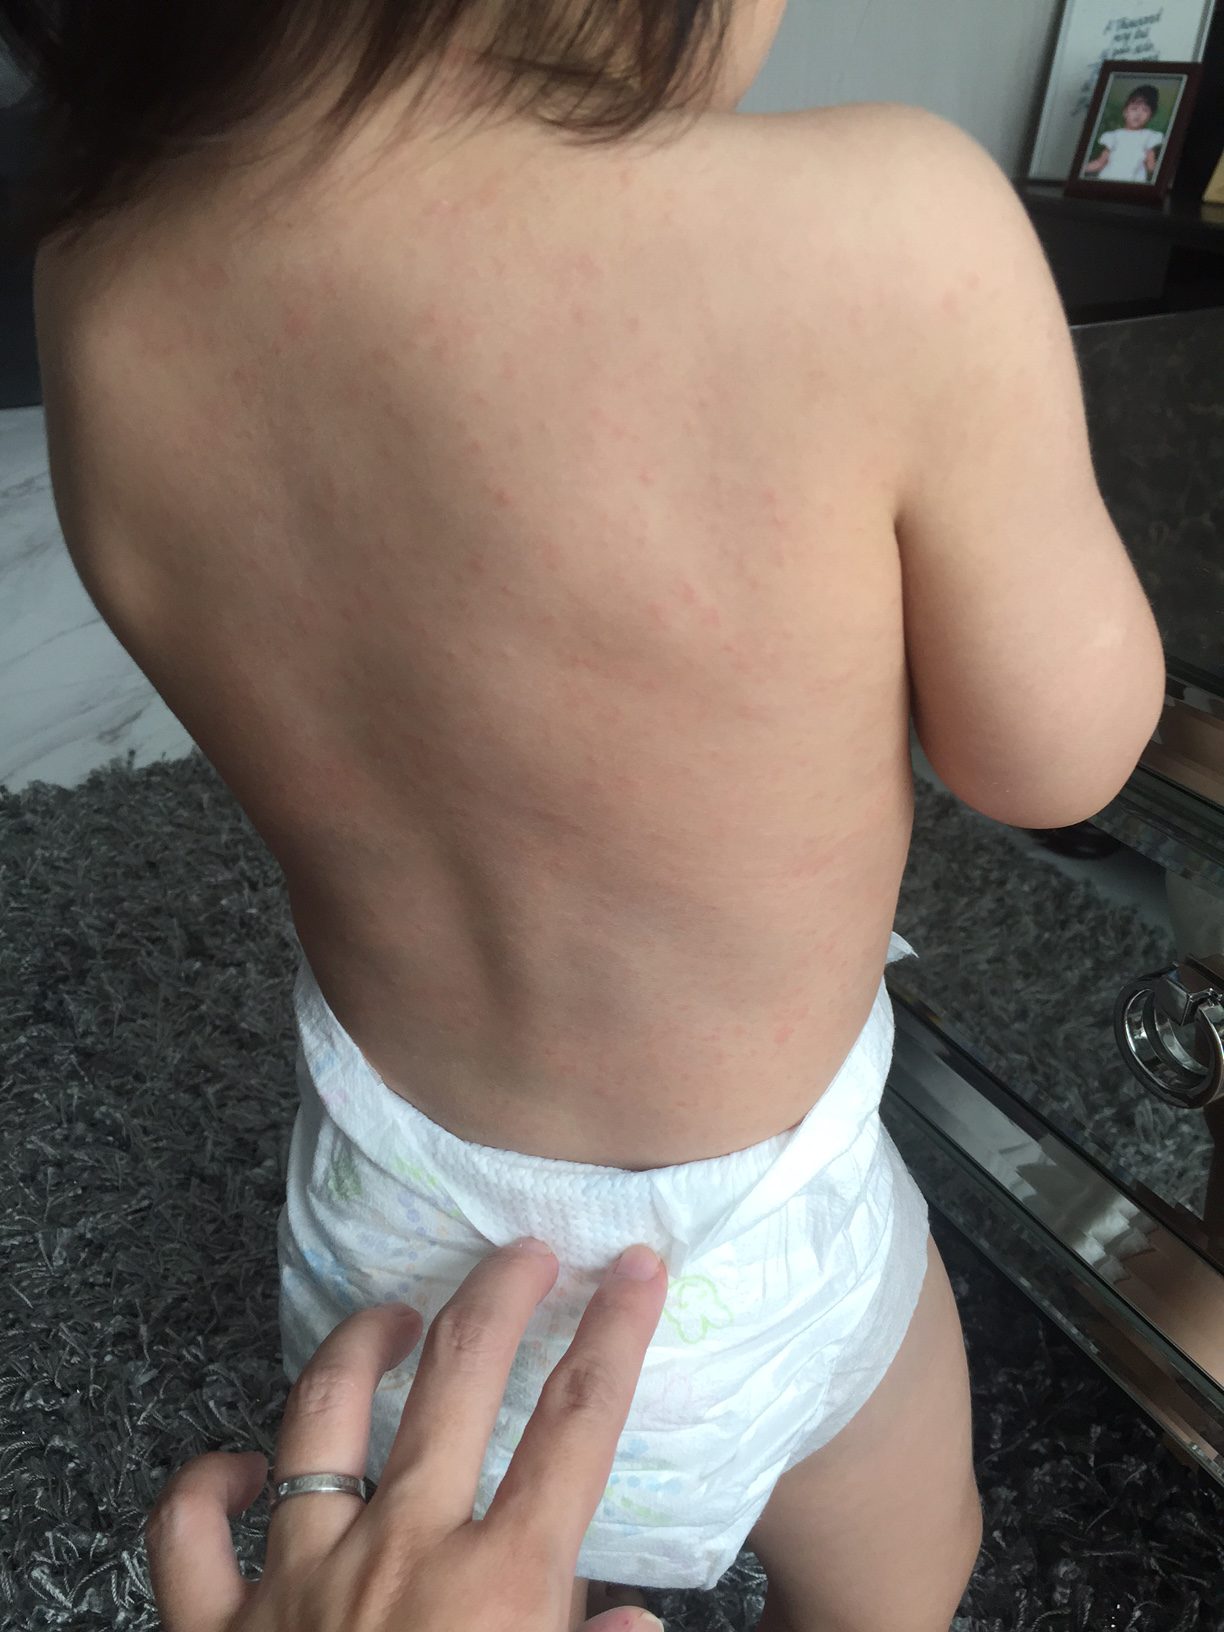 roseola fever rash toddler singapore 1